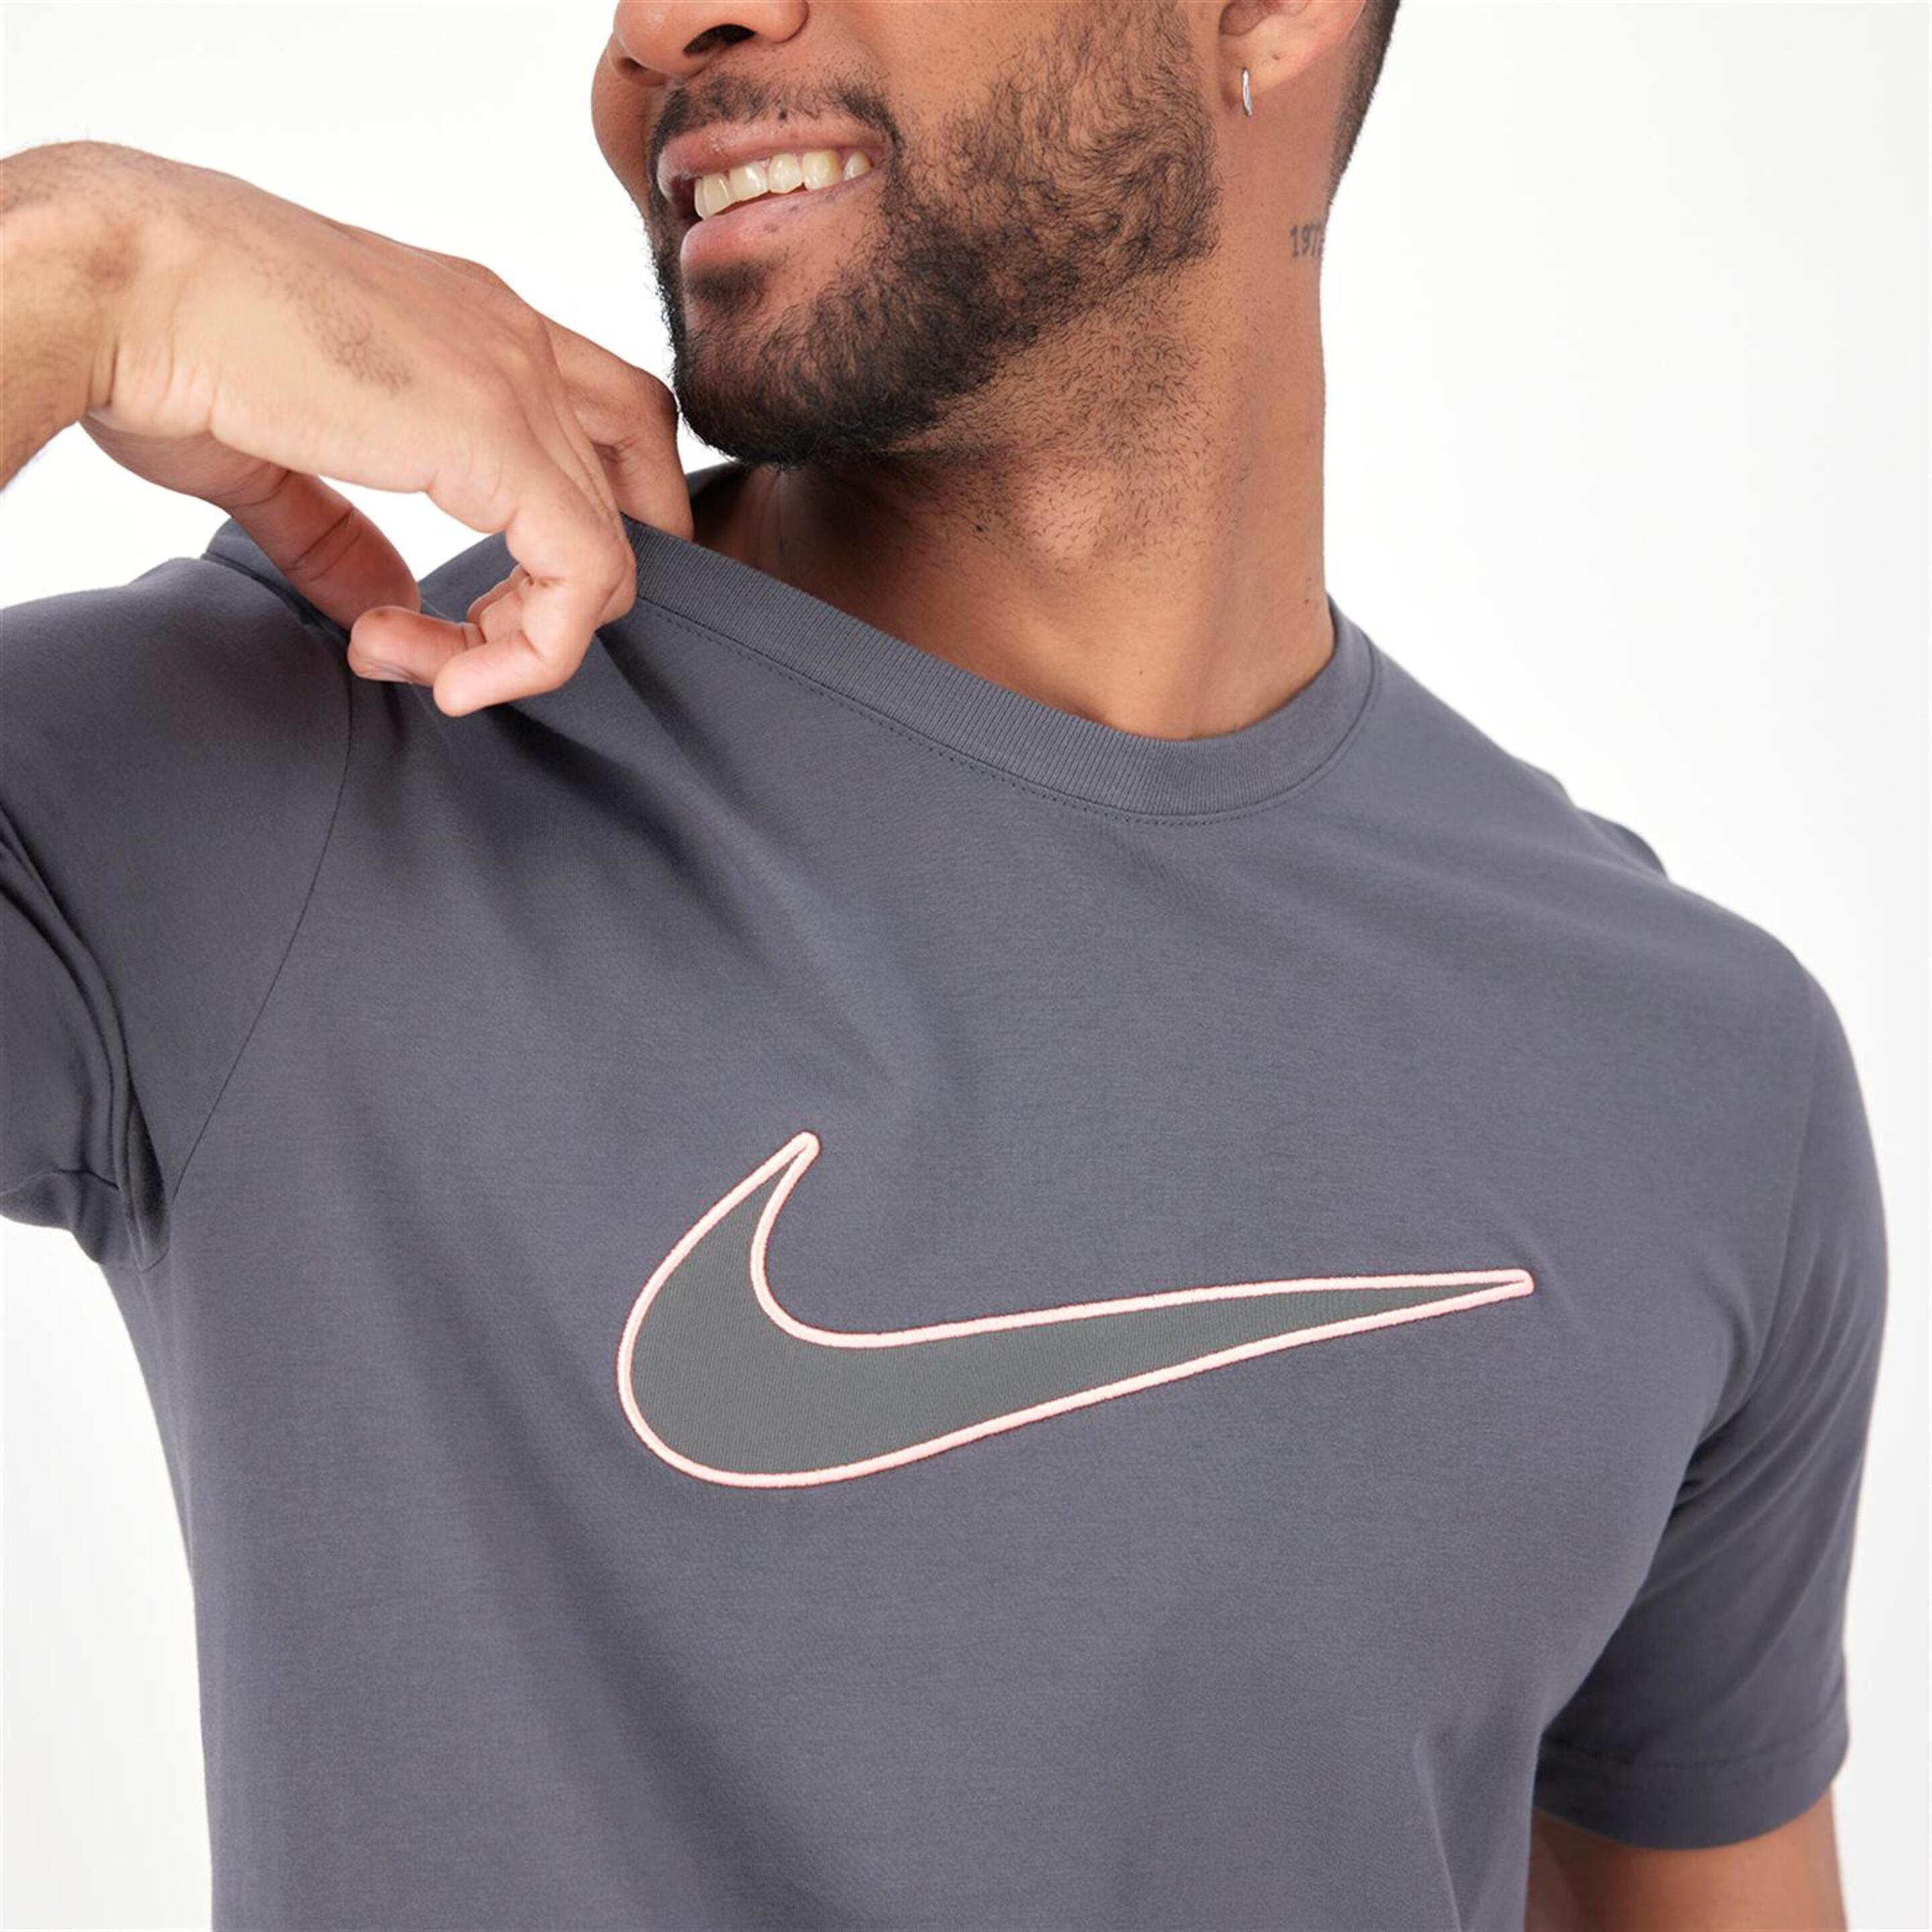 Camiseta Nike - Gris - Camiseta Hombre